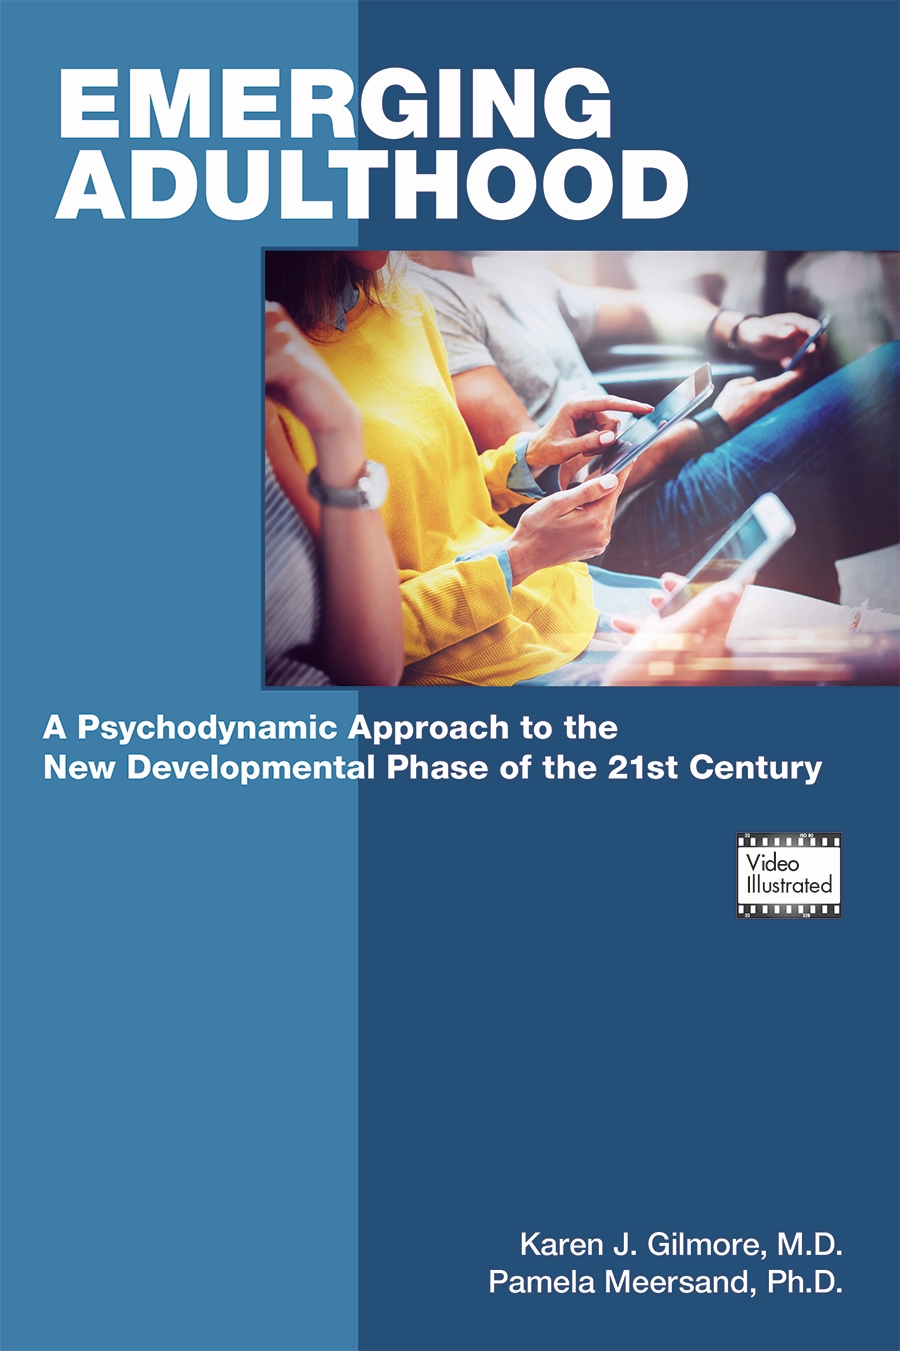 Emerging Adulthood: A Psychodynamic Approach to the New Developmental Phase of the 21st Century.  Karen J. Gilmore, M.D., Pamela Meersand, Ph.D.